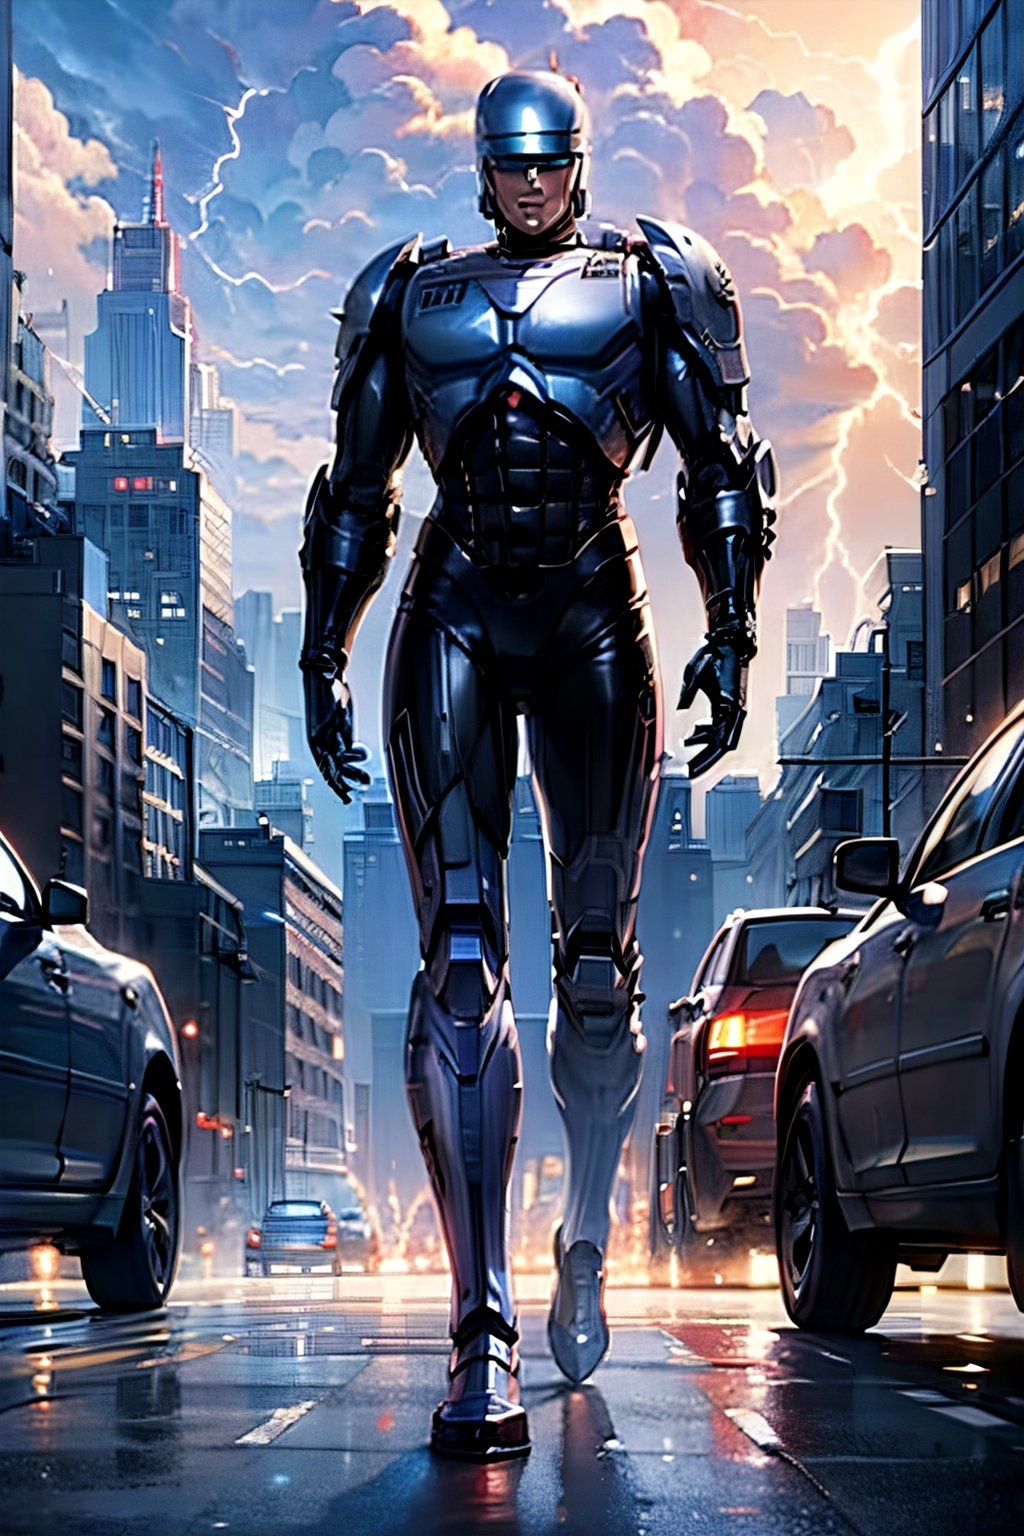 Robocop, full body, futuristic city, cloudy sky, lightning, crowds, cars, 